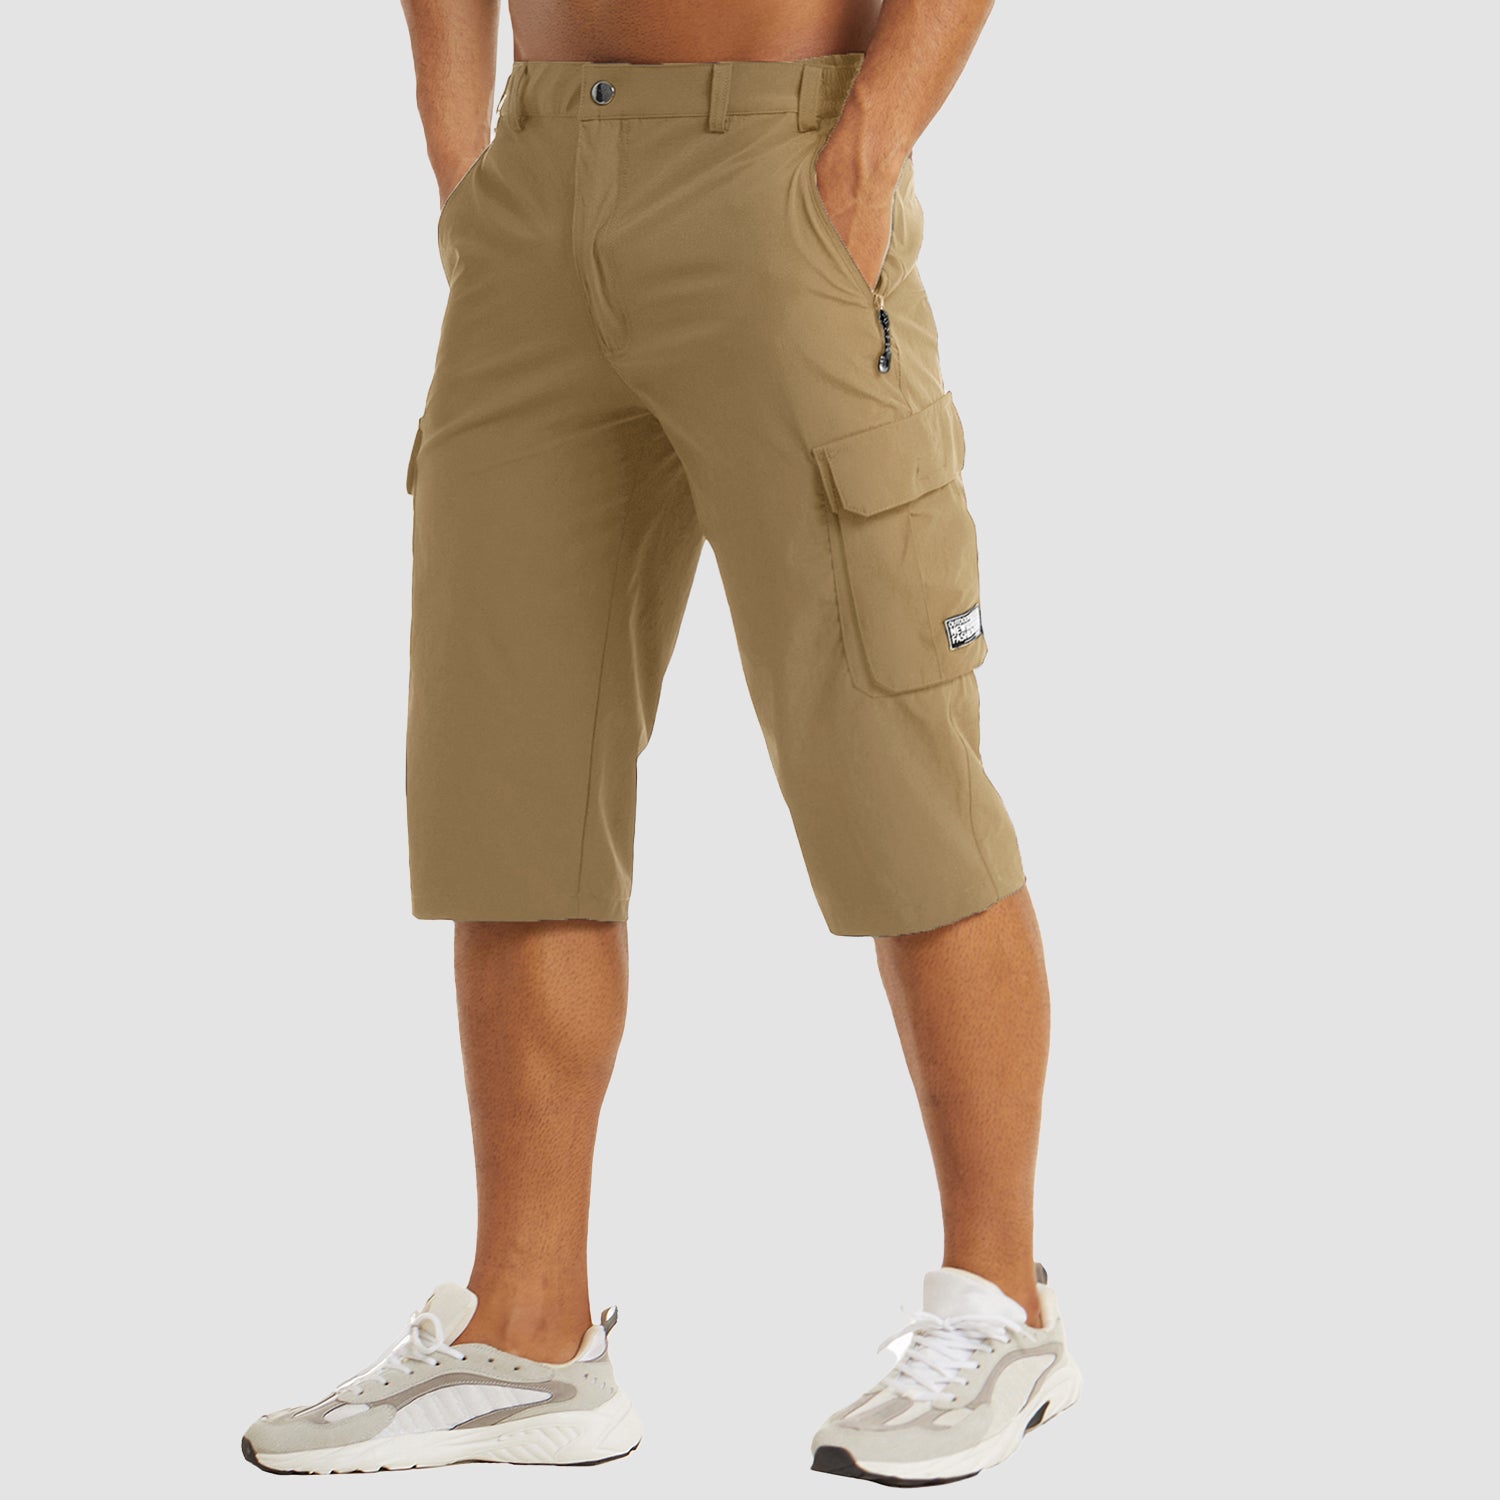 magcomsen MAGCOMSEN Mens Workout Shorts Casual Shorts for Men Big and Tall  Mens Hiking Shorts Fishing Shorts for Men Below Knee Shorts Men